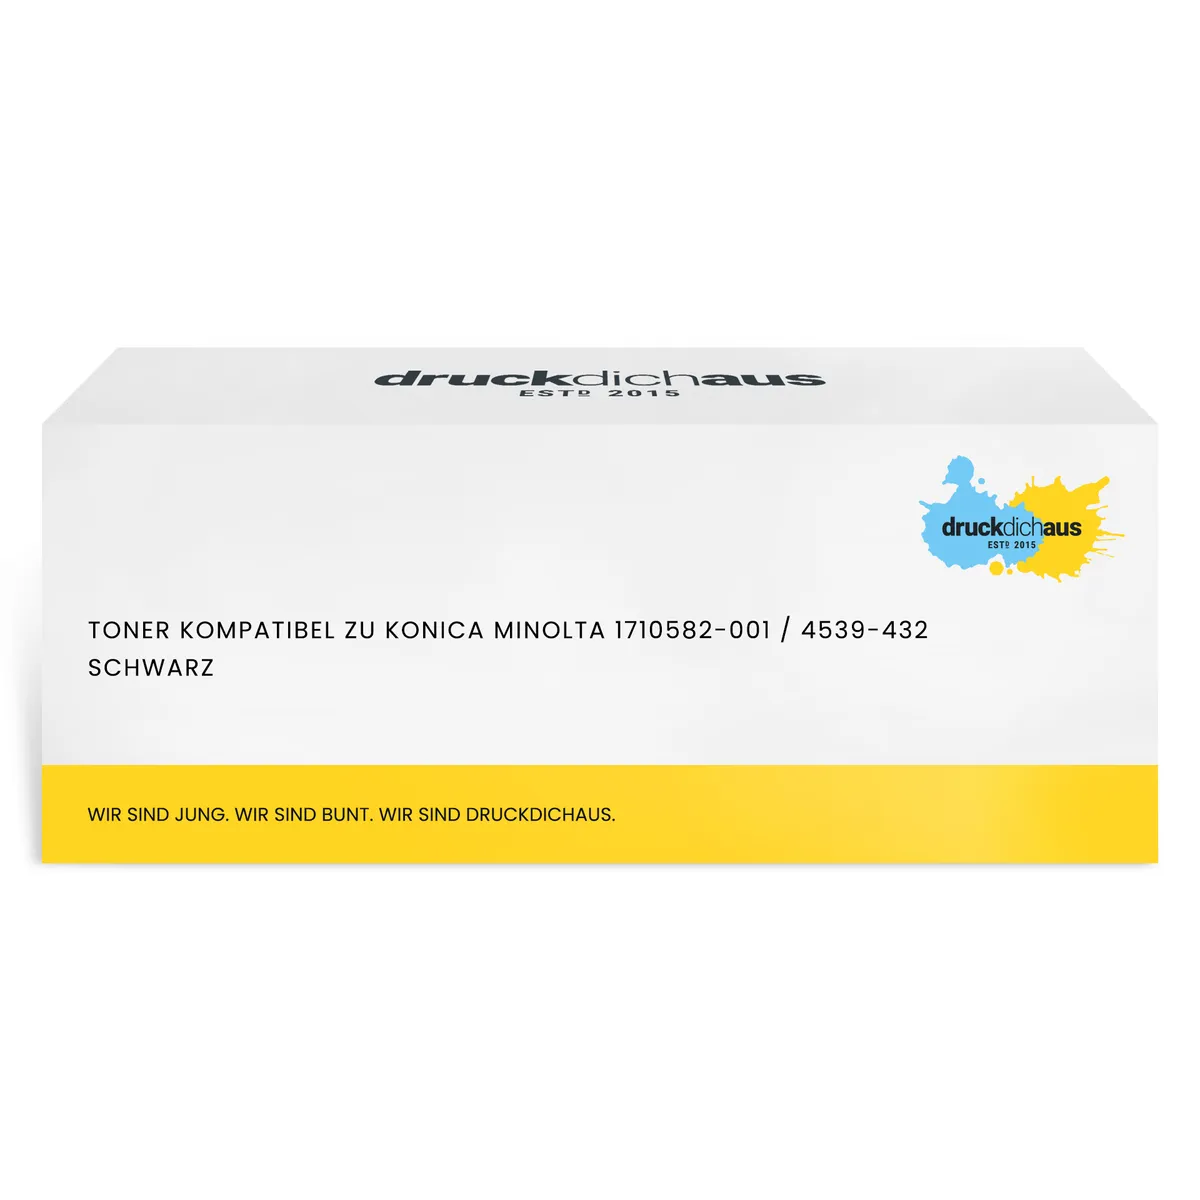 Toner kompatibel zu Konica Minolta 1710582-001 / 4539-432 schwarz